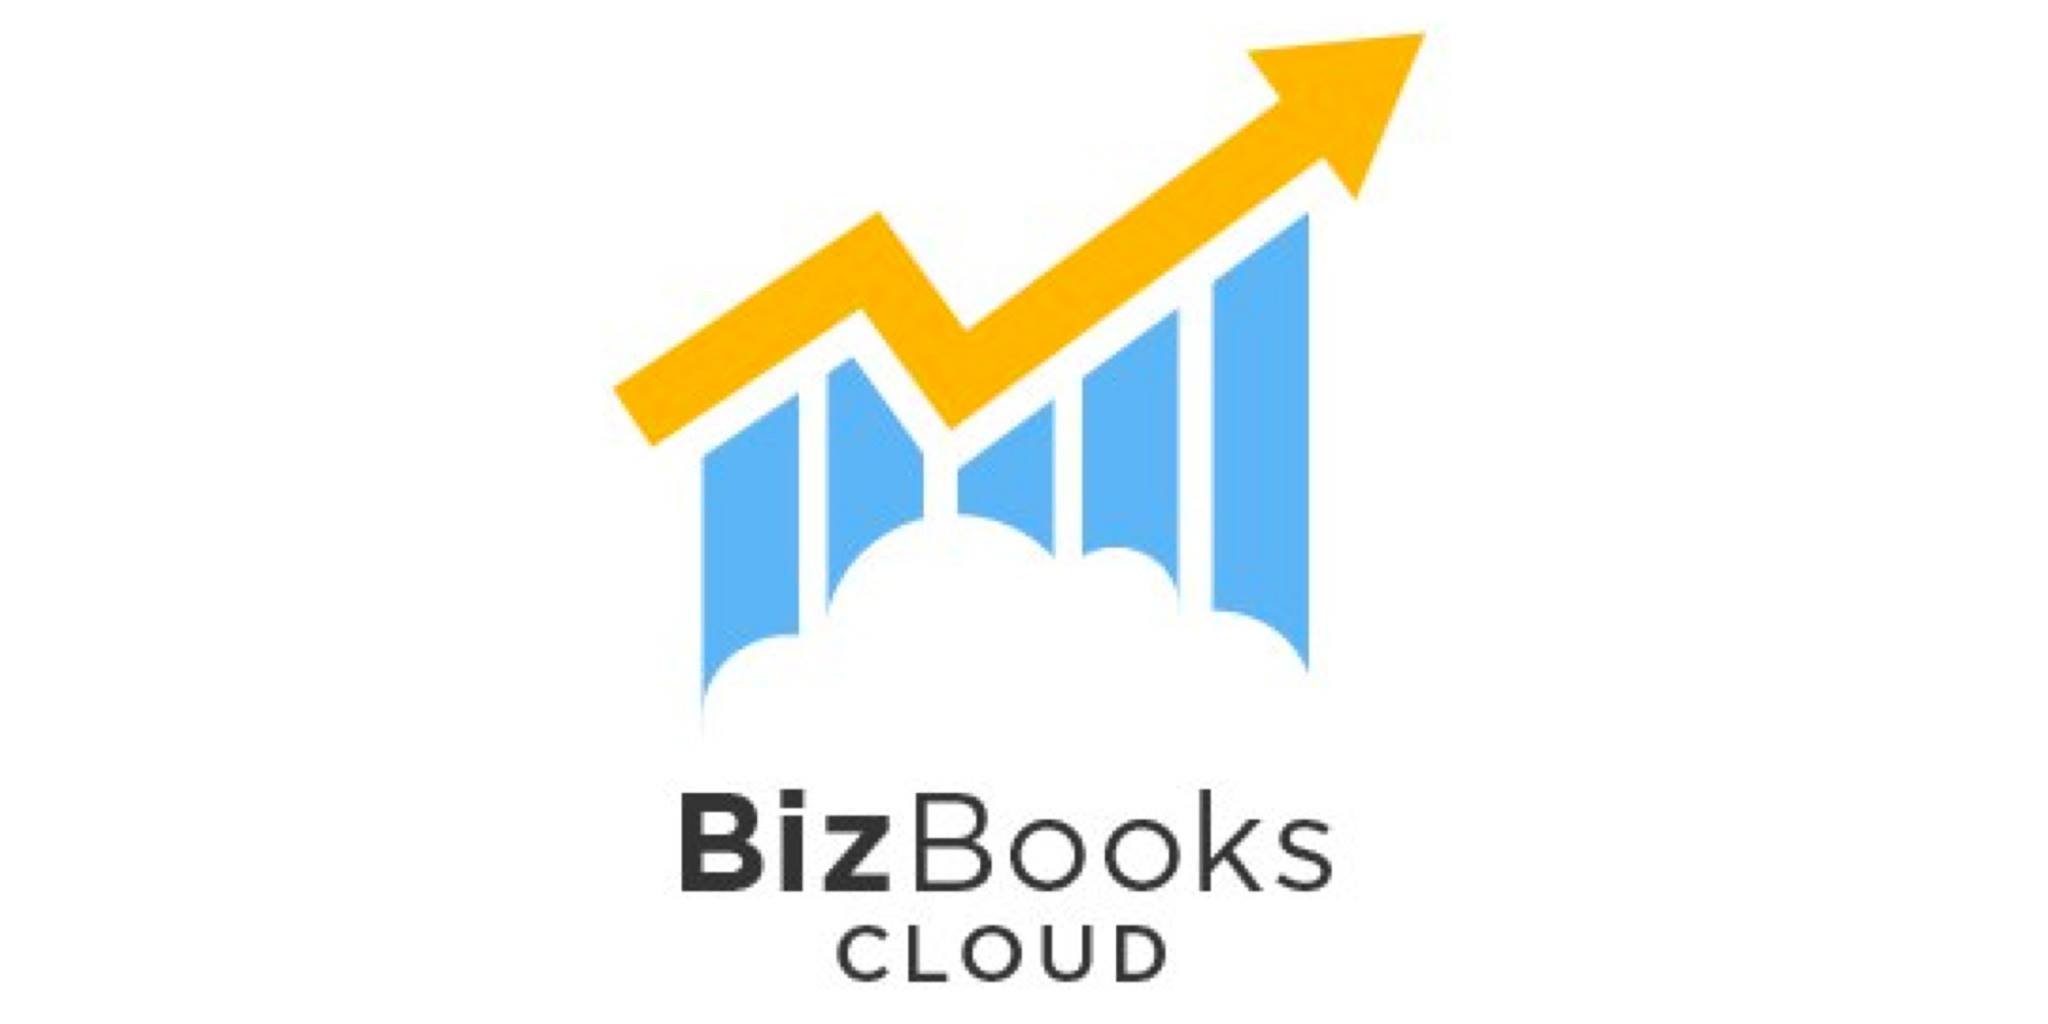 Biz Books Cloud LLC